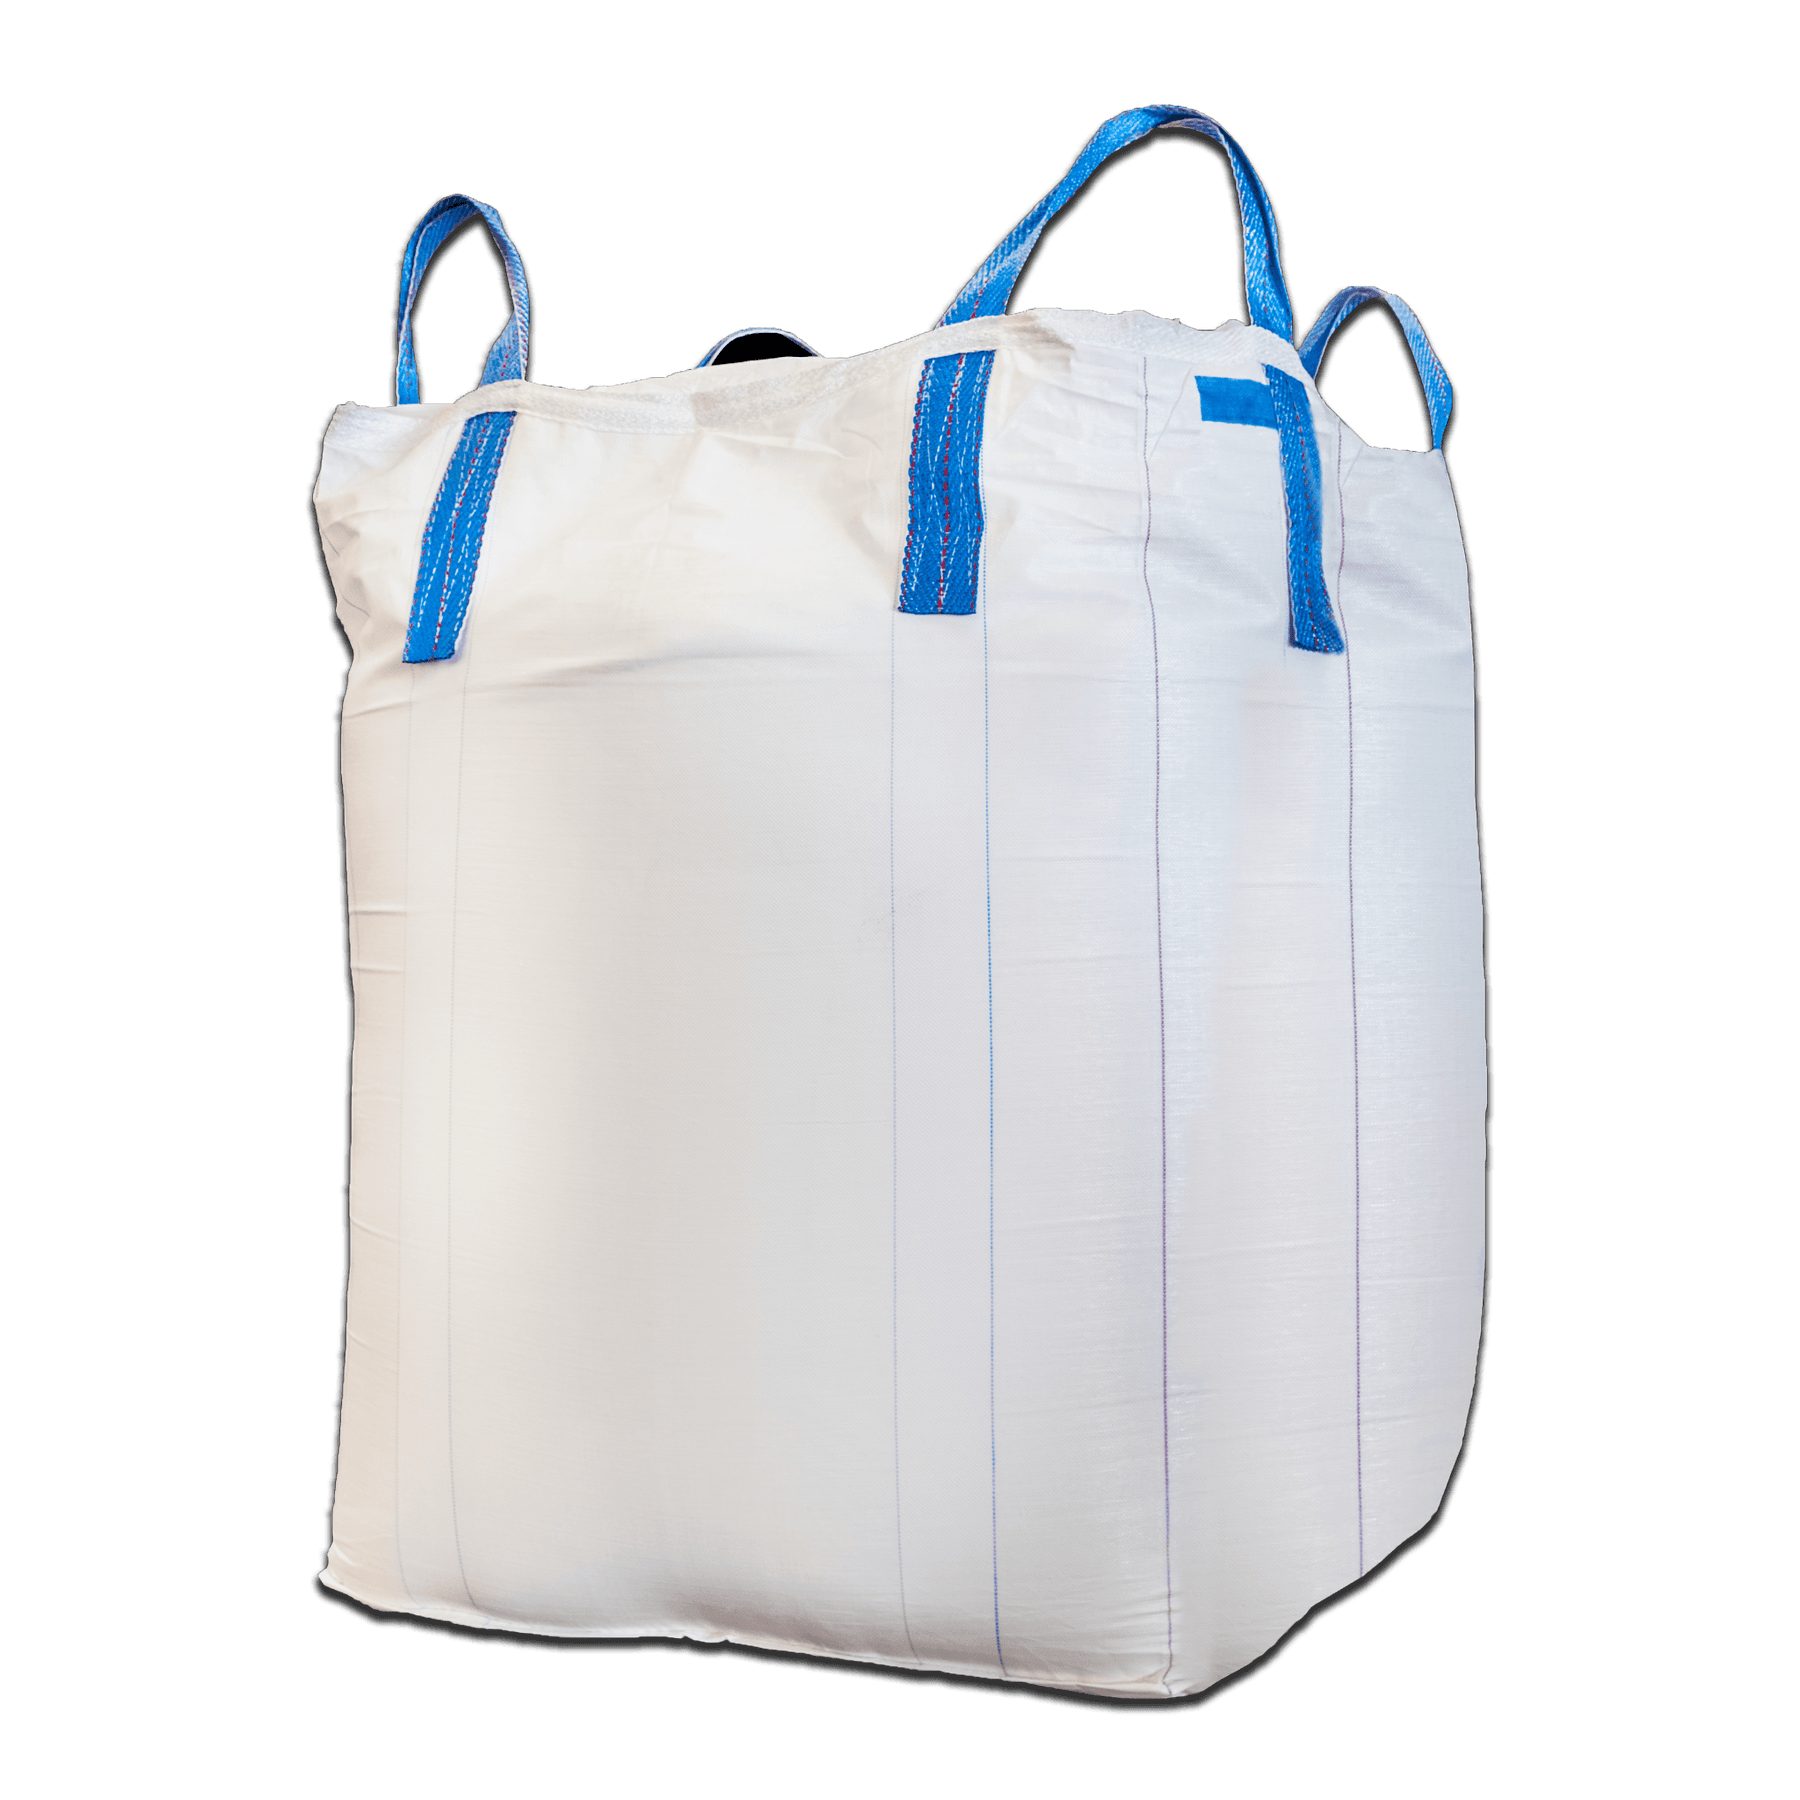 Home - Jumbo Bag